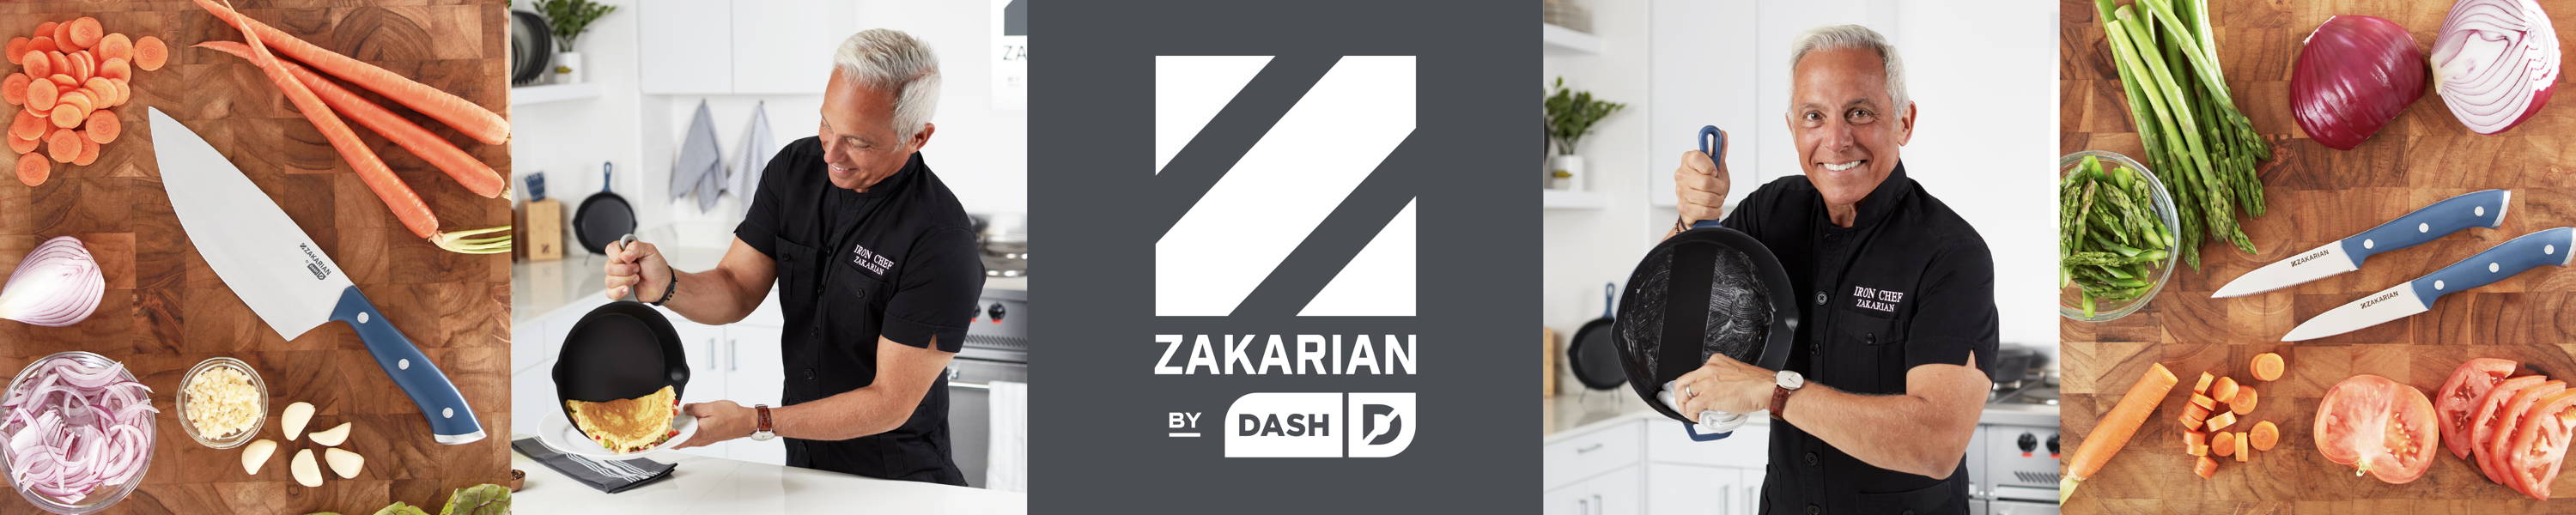 Zakarian by Dash